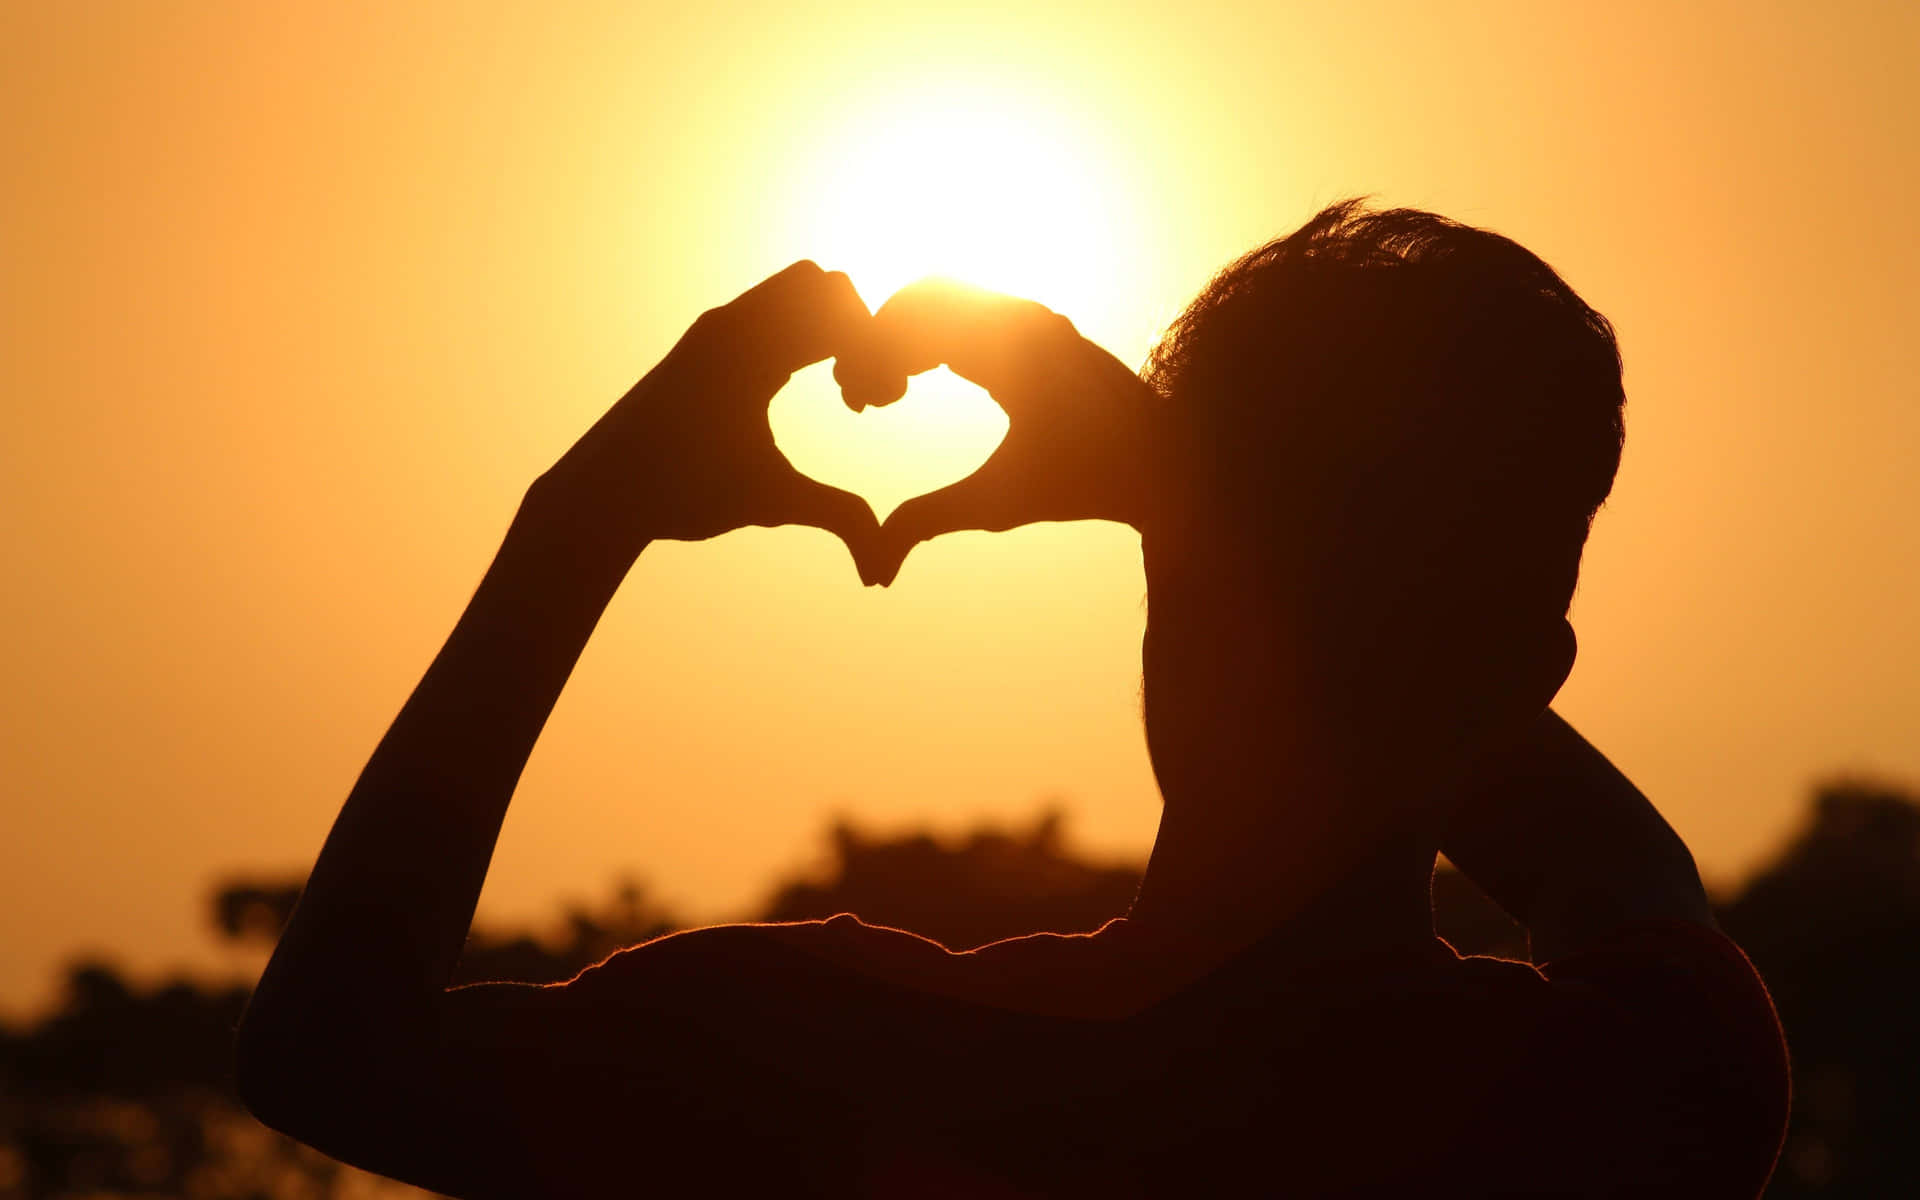 Romantic Heart Silhouette at Sunset Wallpaper